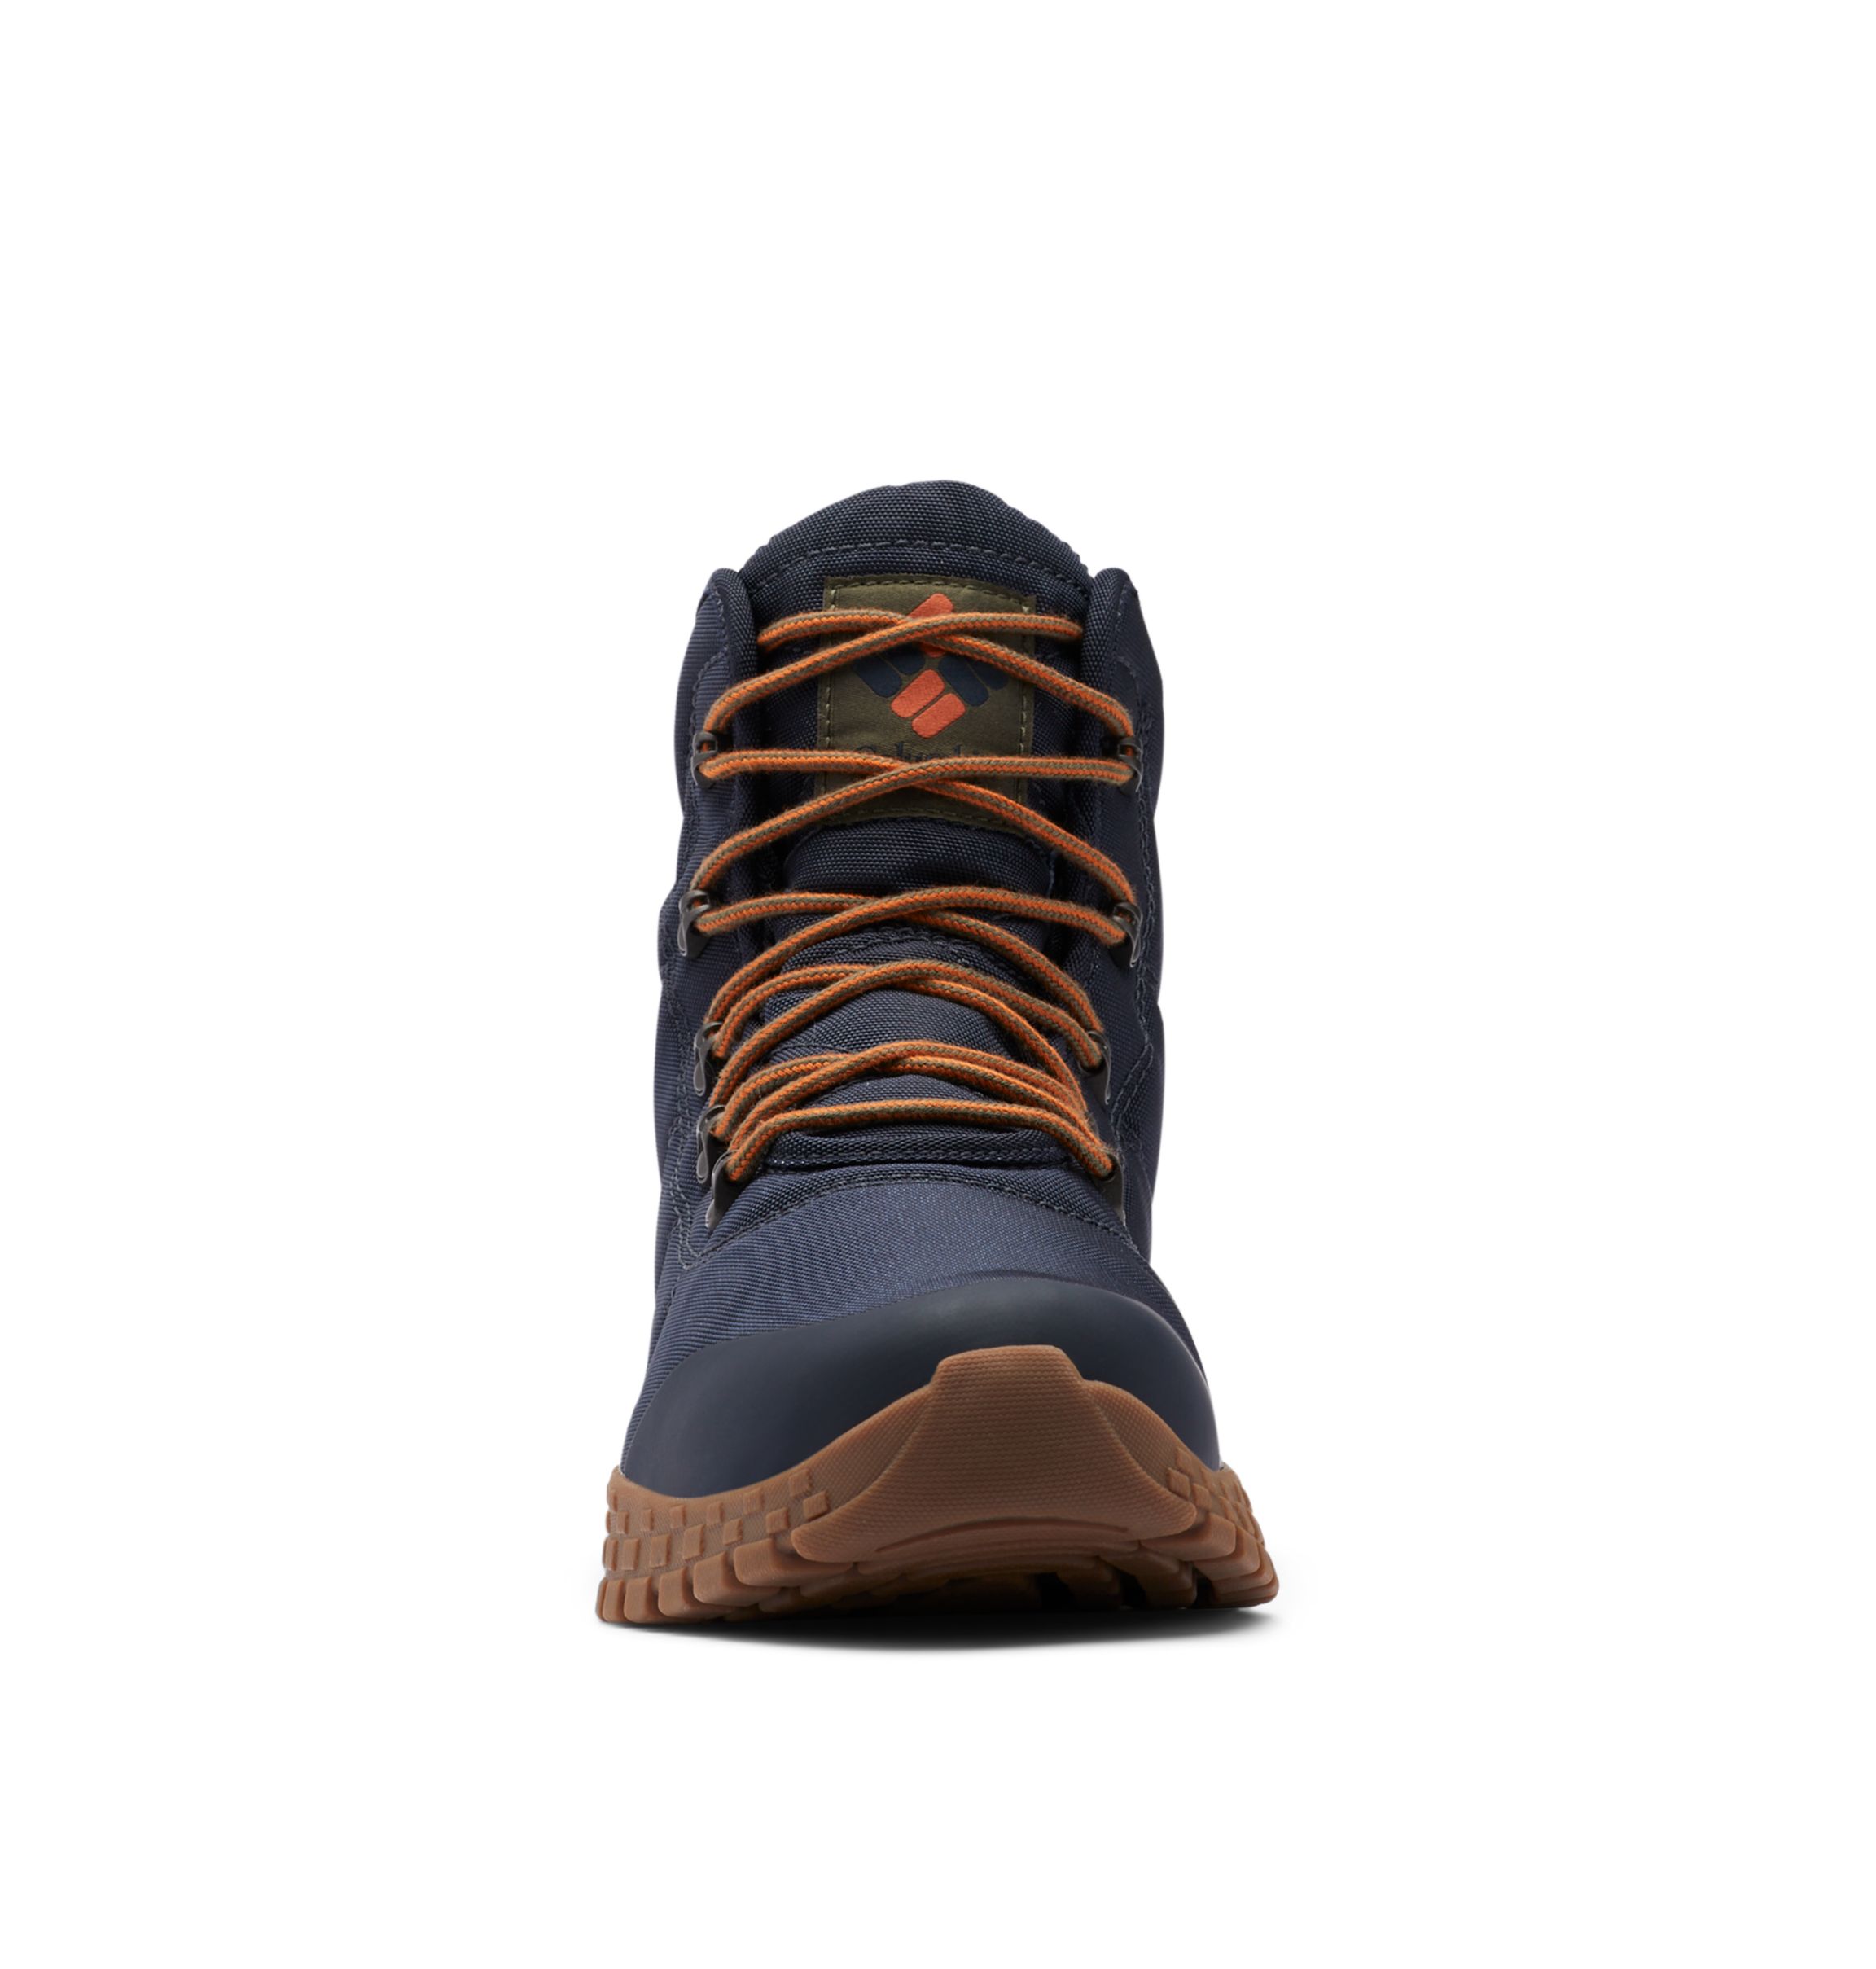 Men's Fairbanks Omni-Heat Boots | Columbia Sportswear